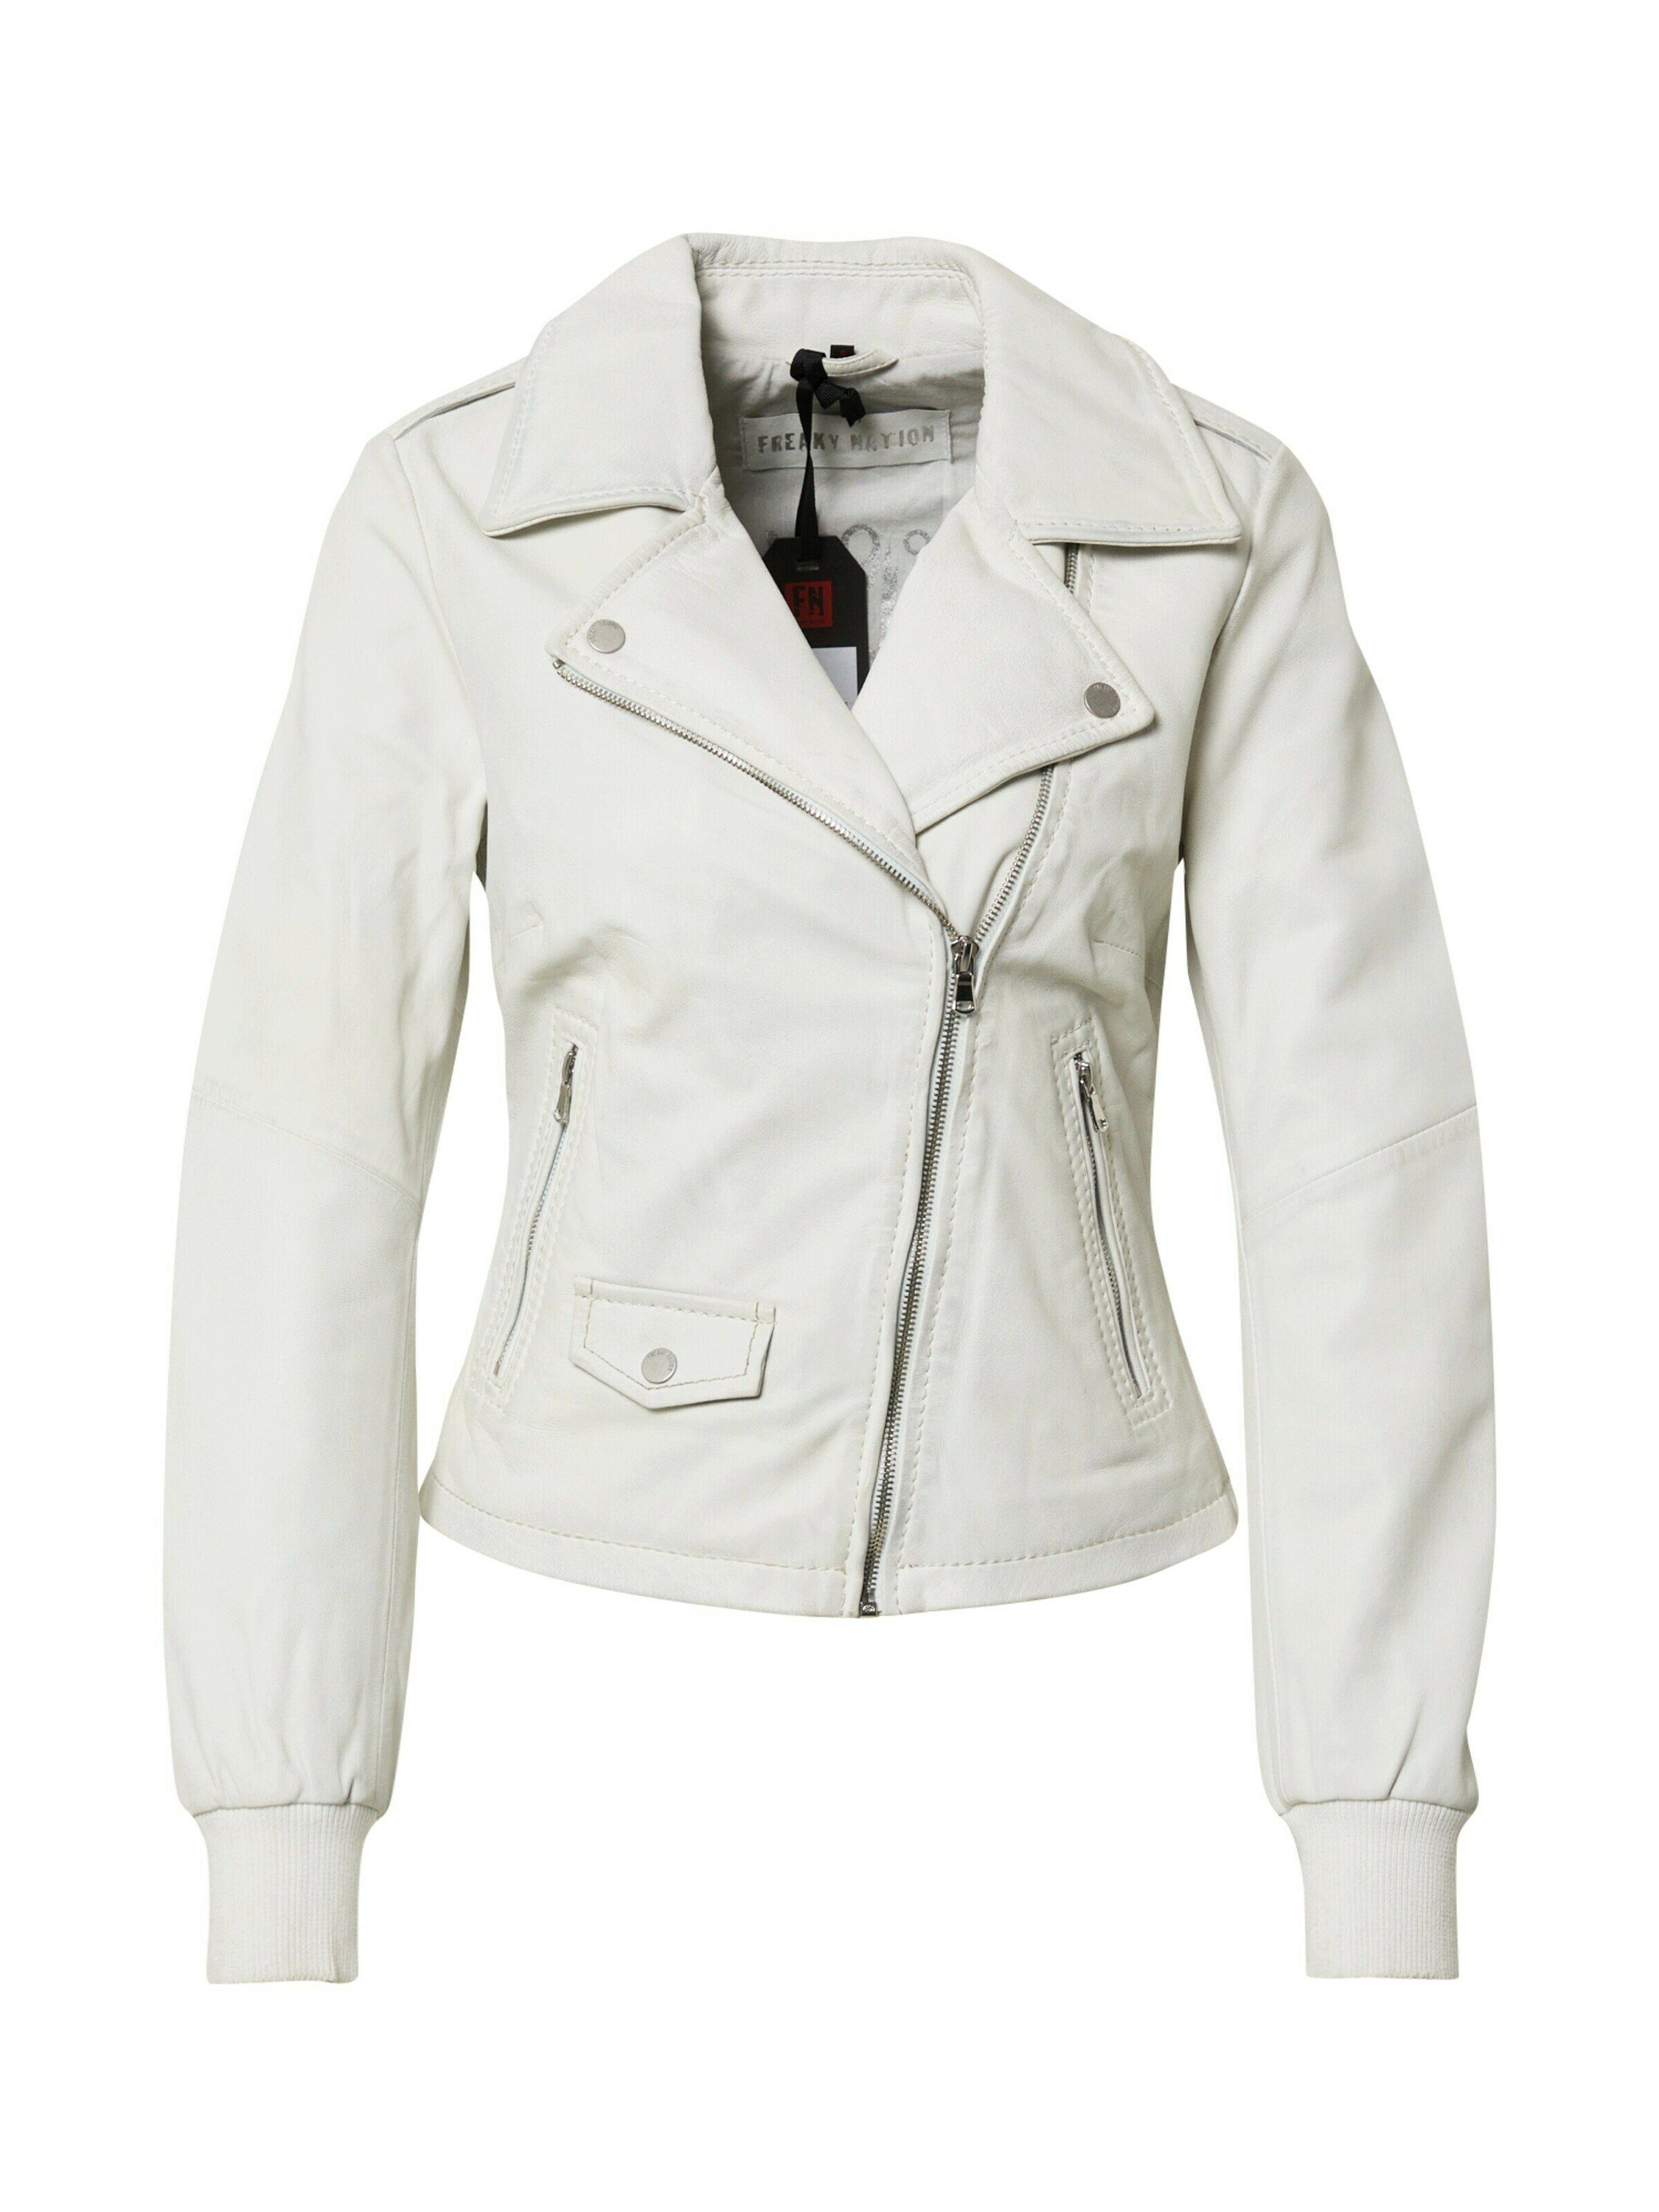 Weiße Damen-Lederjacke online kaufen » Echtleder-Jacke | OTTO